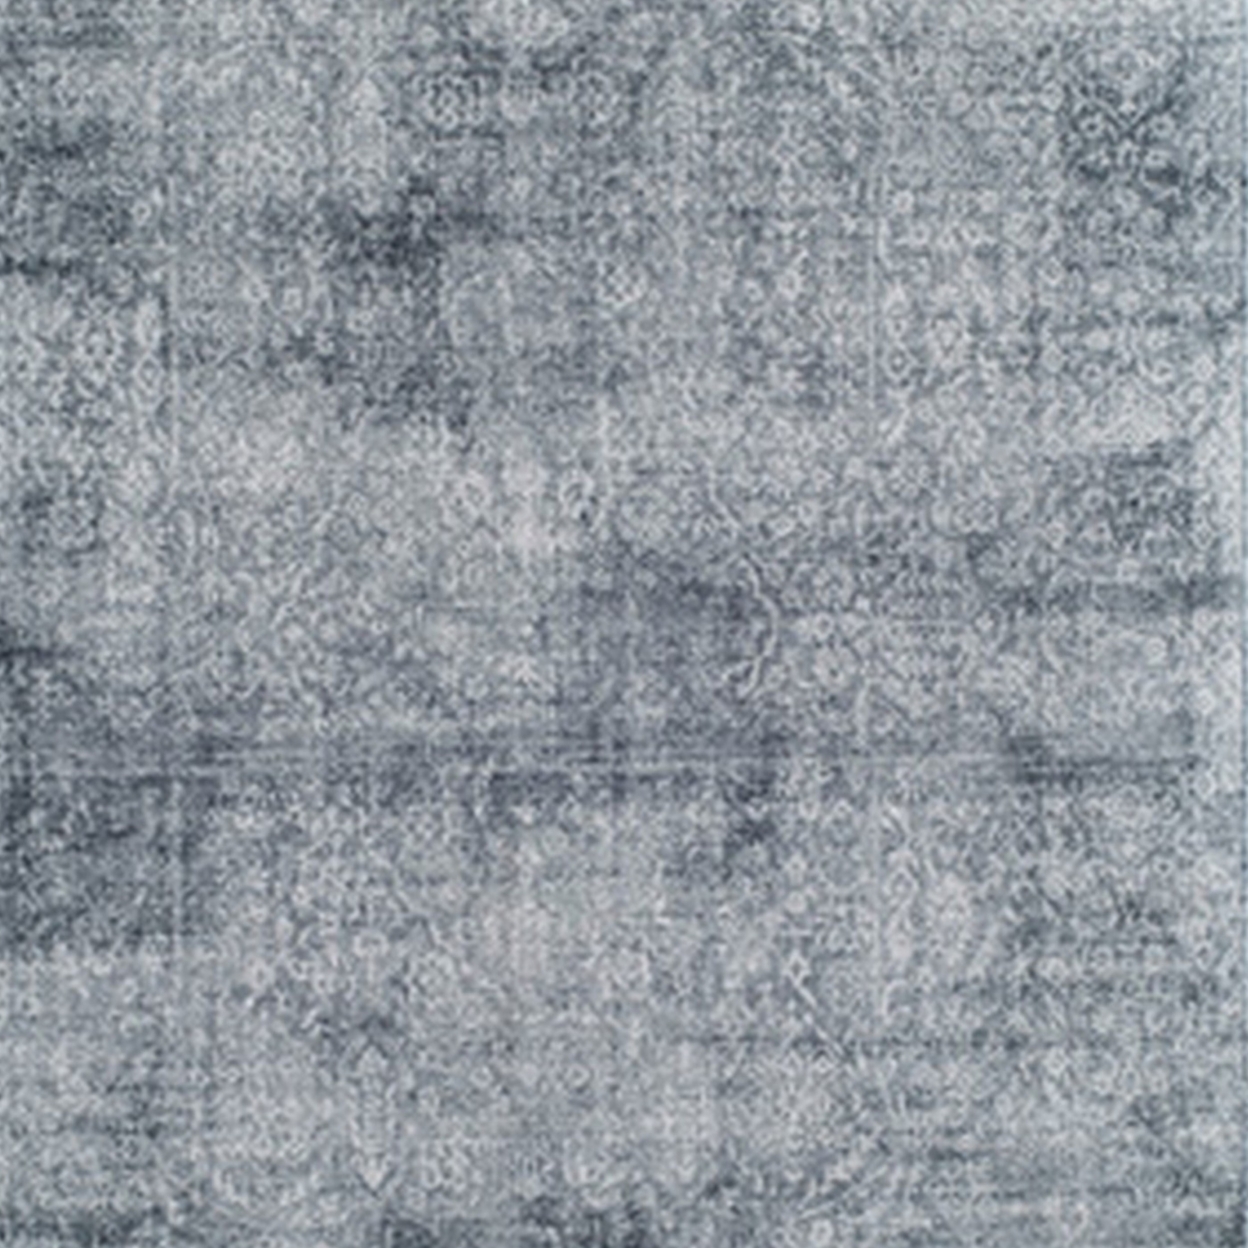 Hynn 5 X 7 Area Rug, Natural Teal Blue Polyester Fabric, Distressed Print- Saltoro Sherpi